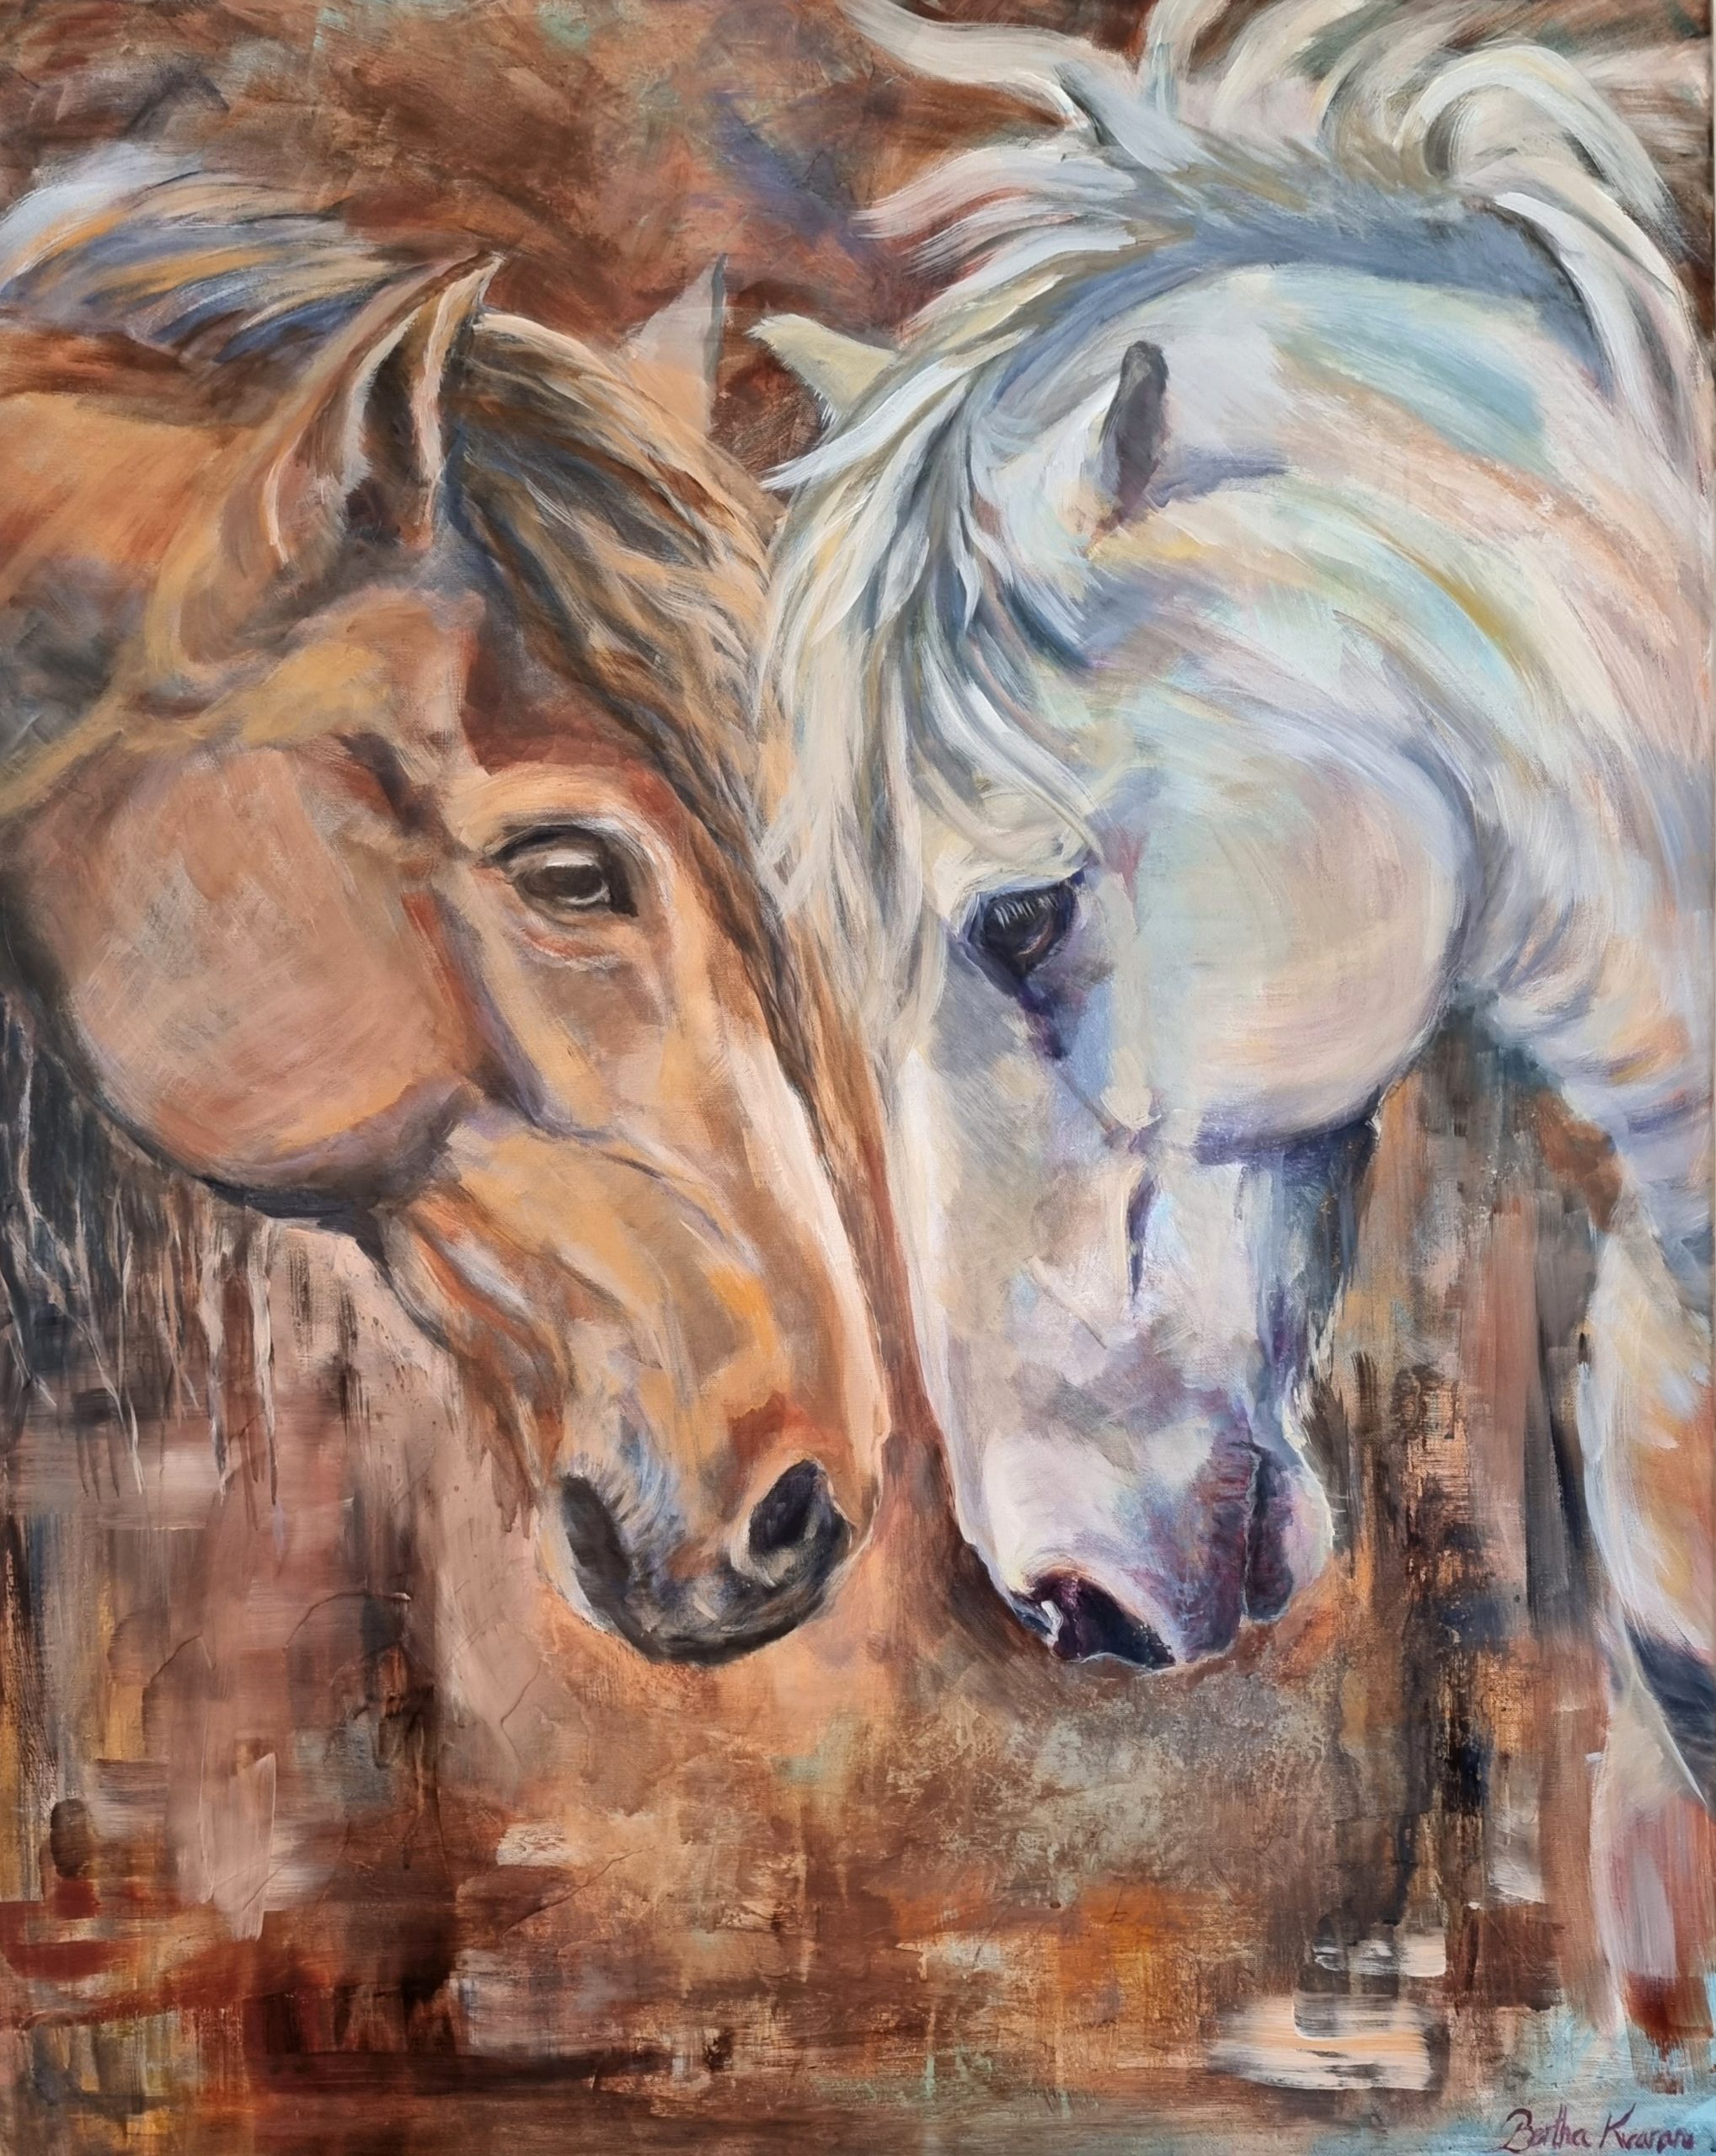 Photograph of artwork named Bonding, abstract realism painting of two horses by Bertha Kvaran